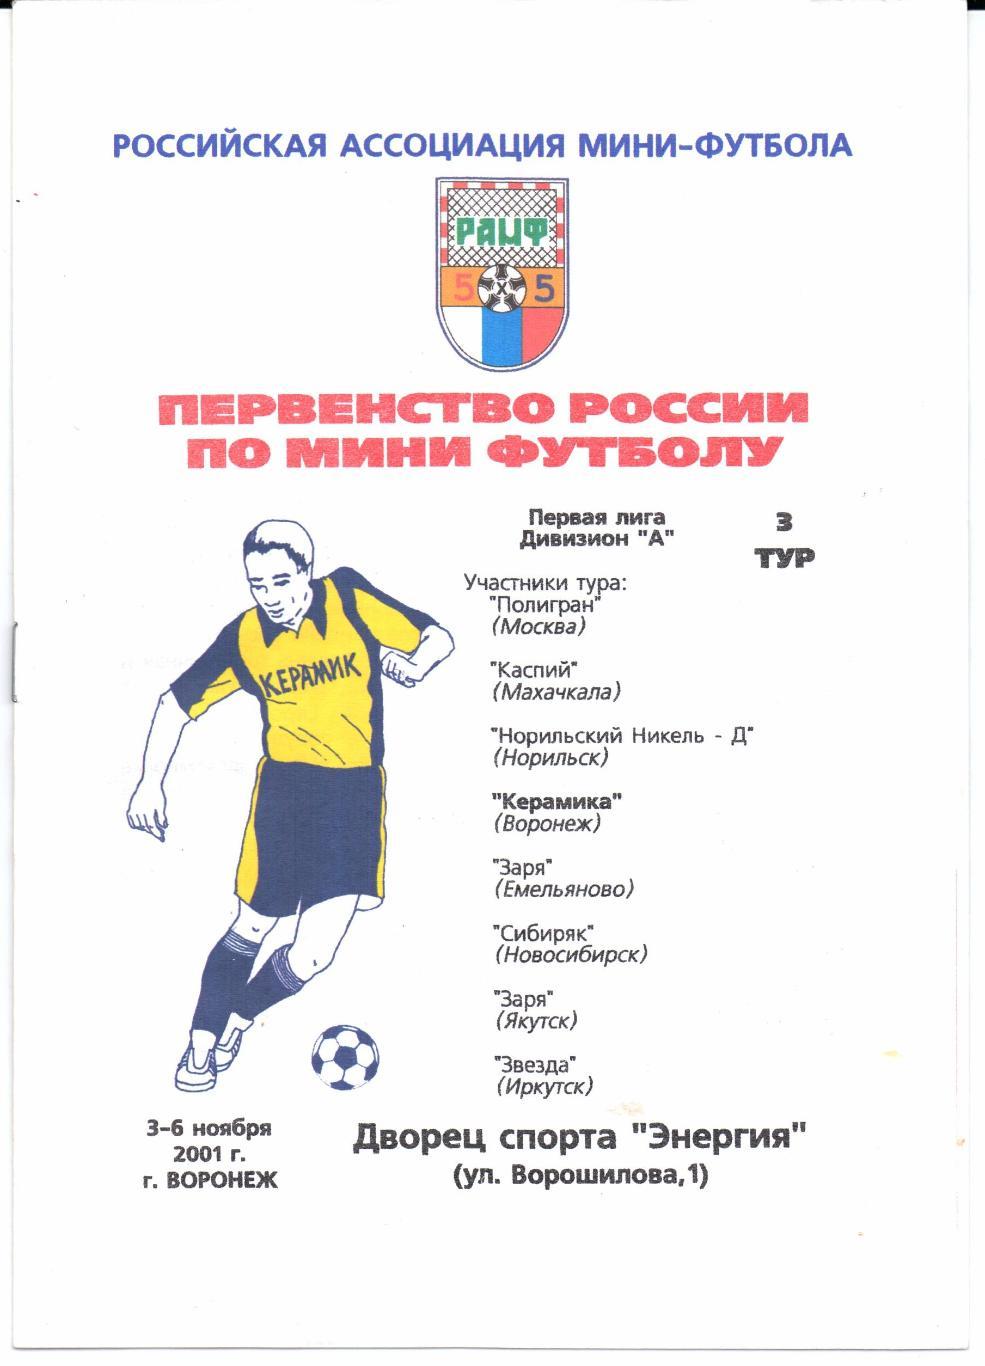 Мини-футбол Первая лига 3-й тур 03-06.11.2001 Воронеж